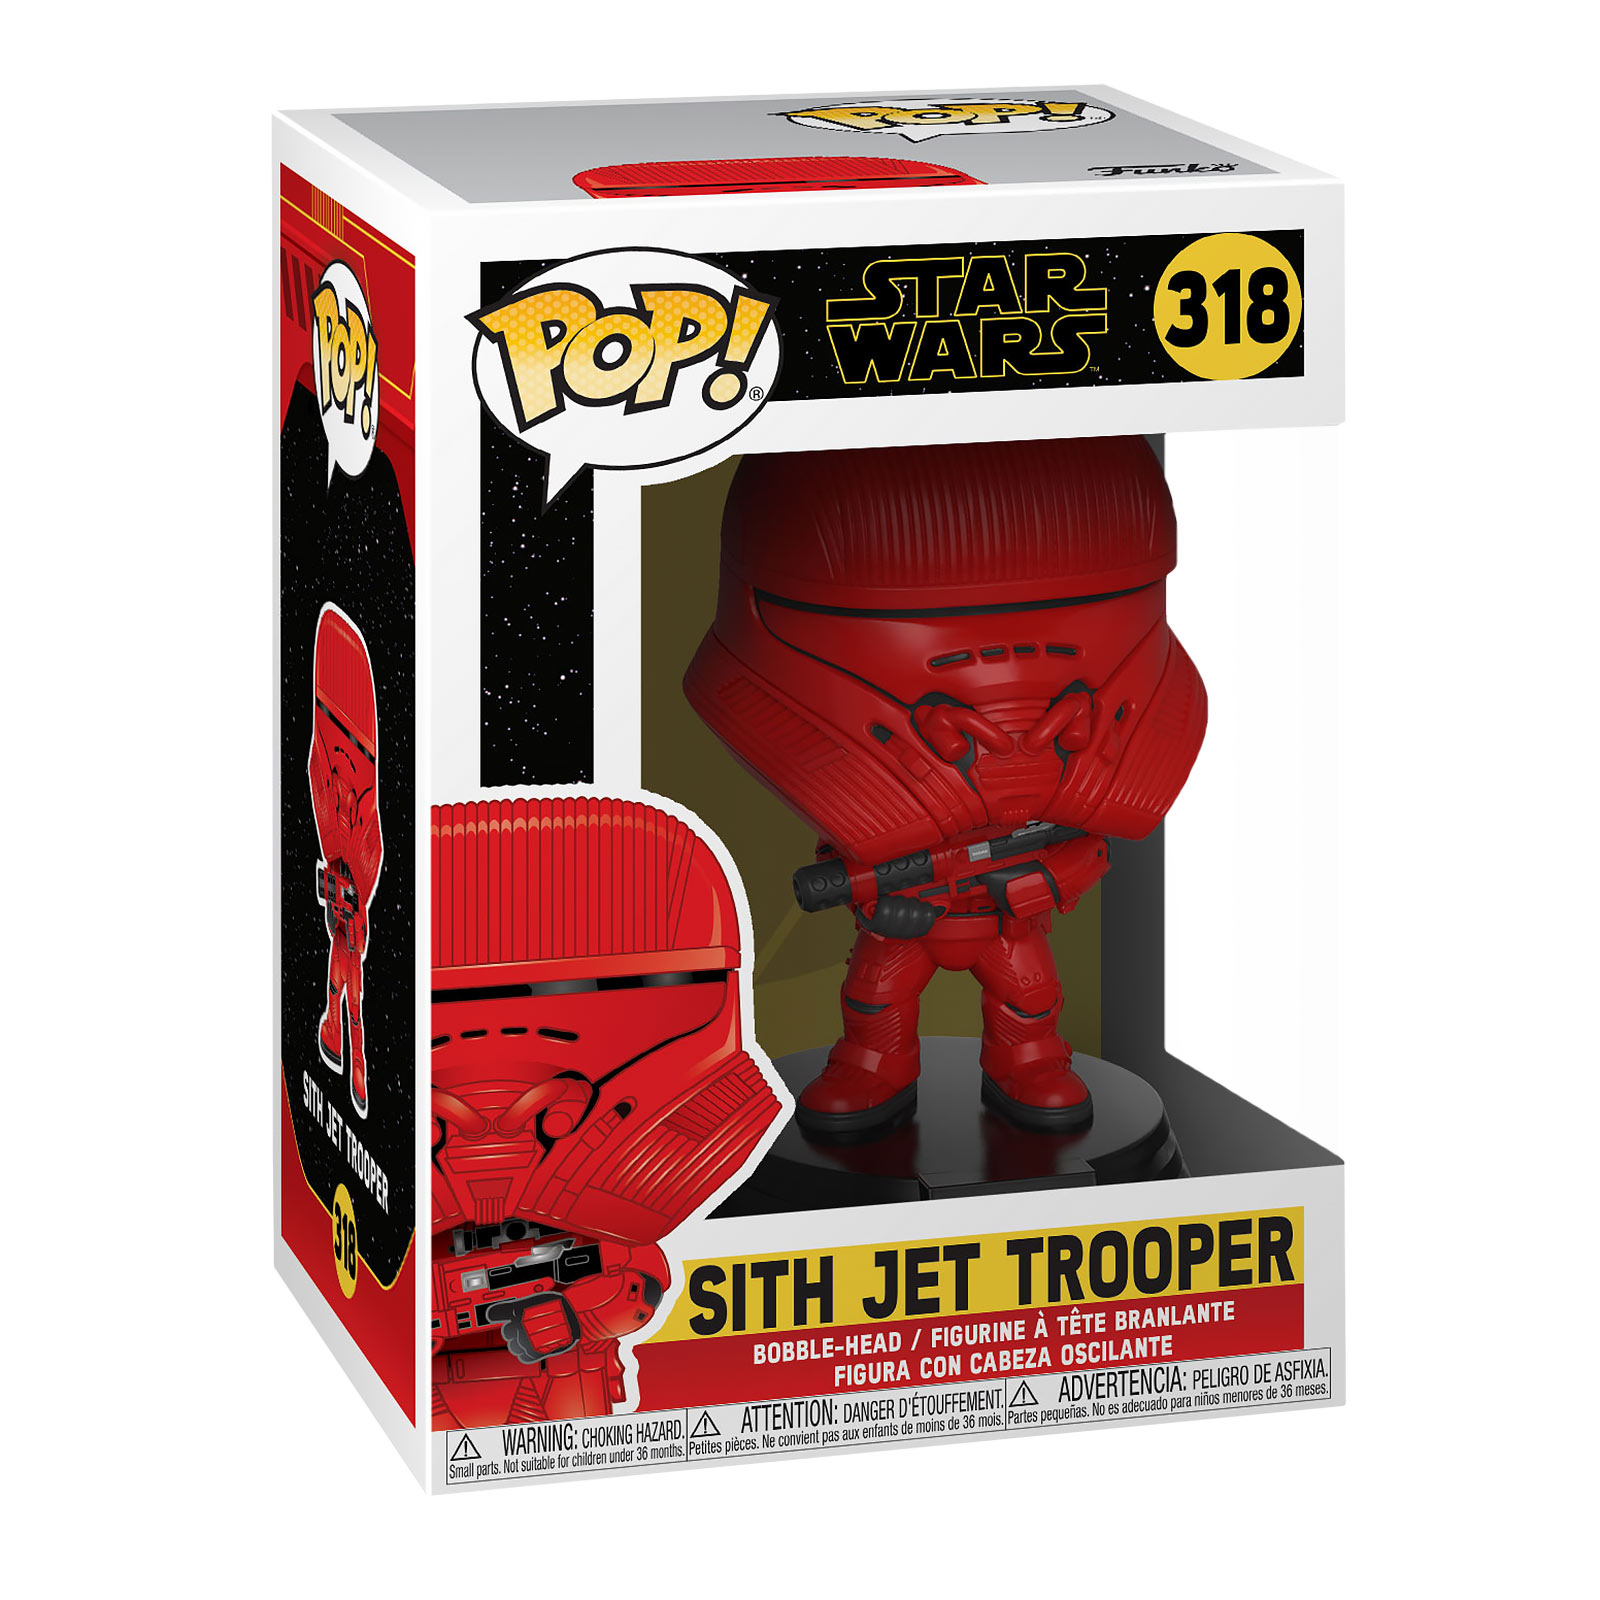 Star Wars - Sith Jet Trooper Funko Pop bobblehead figure